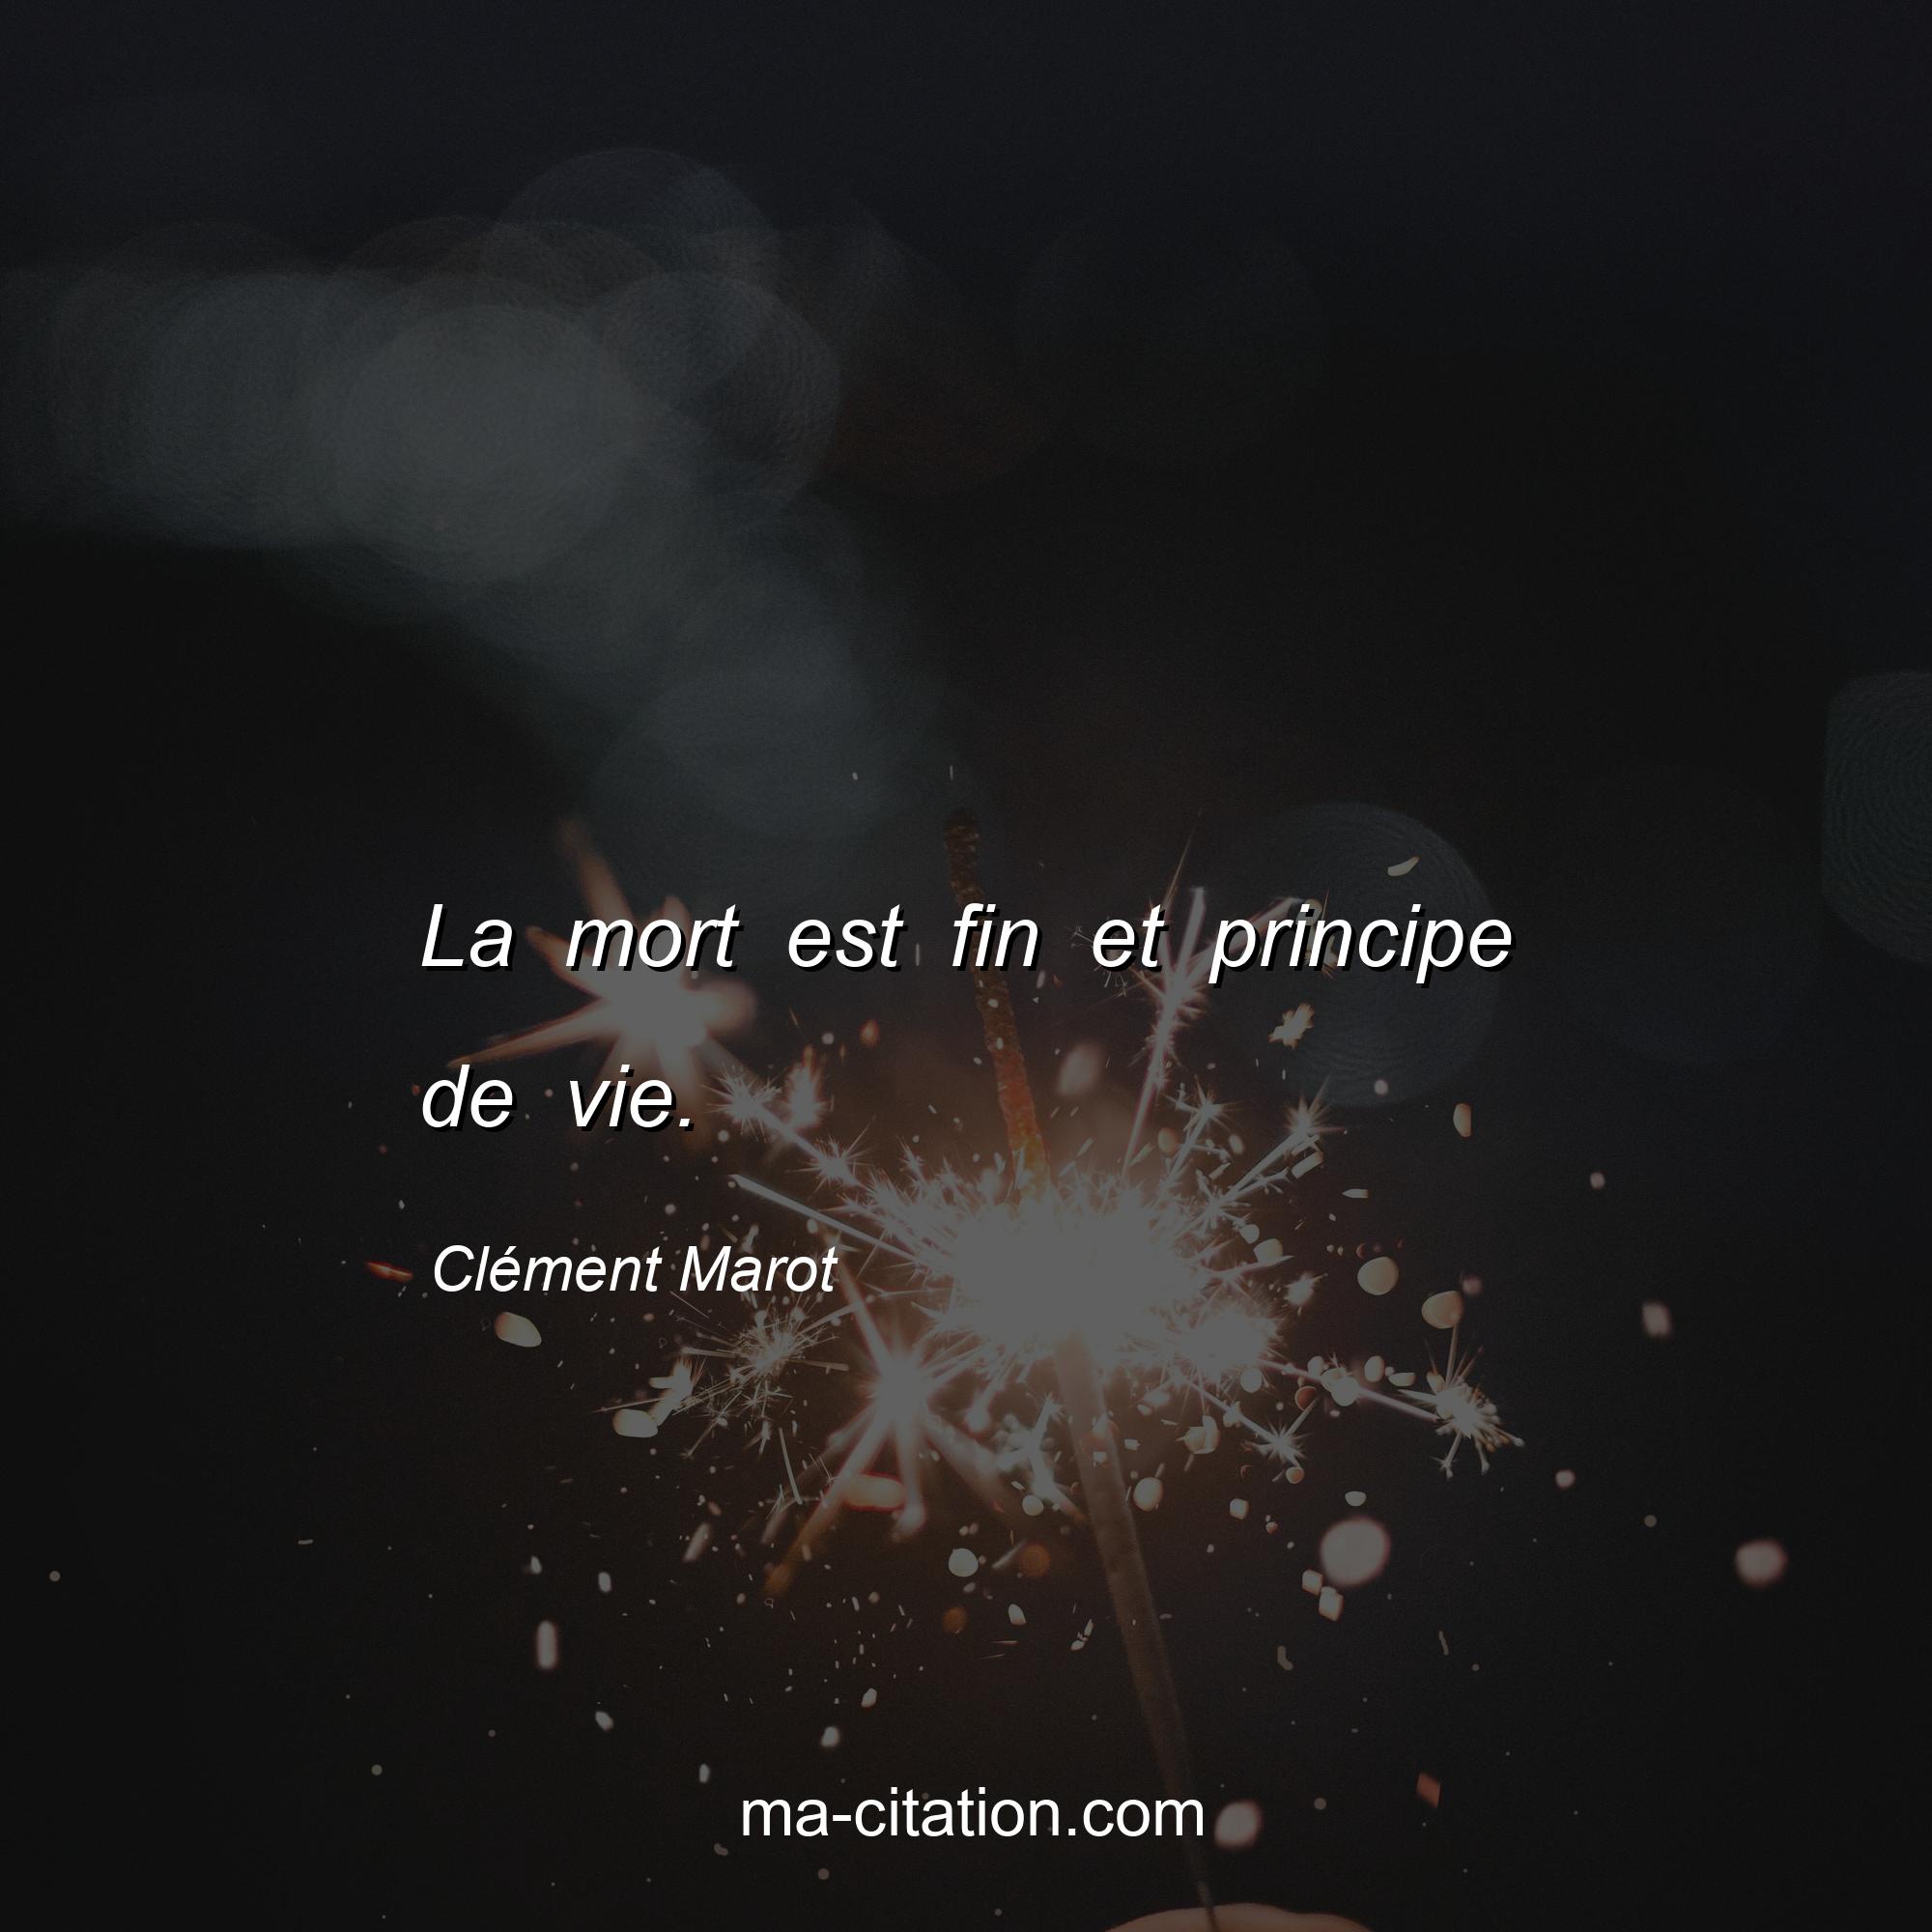 Clément Marot : La mort est fin et principe de vie.